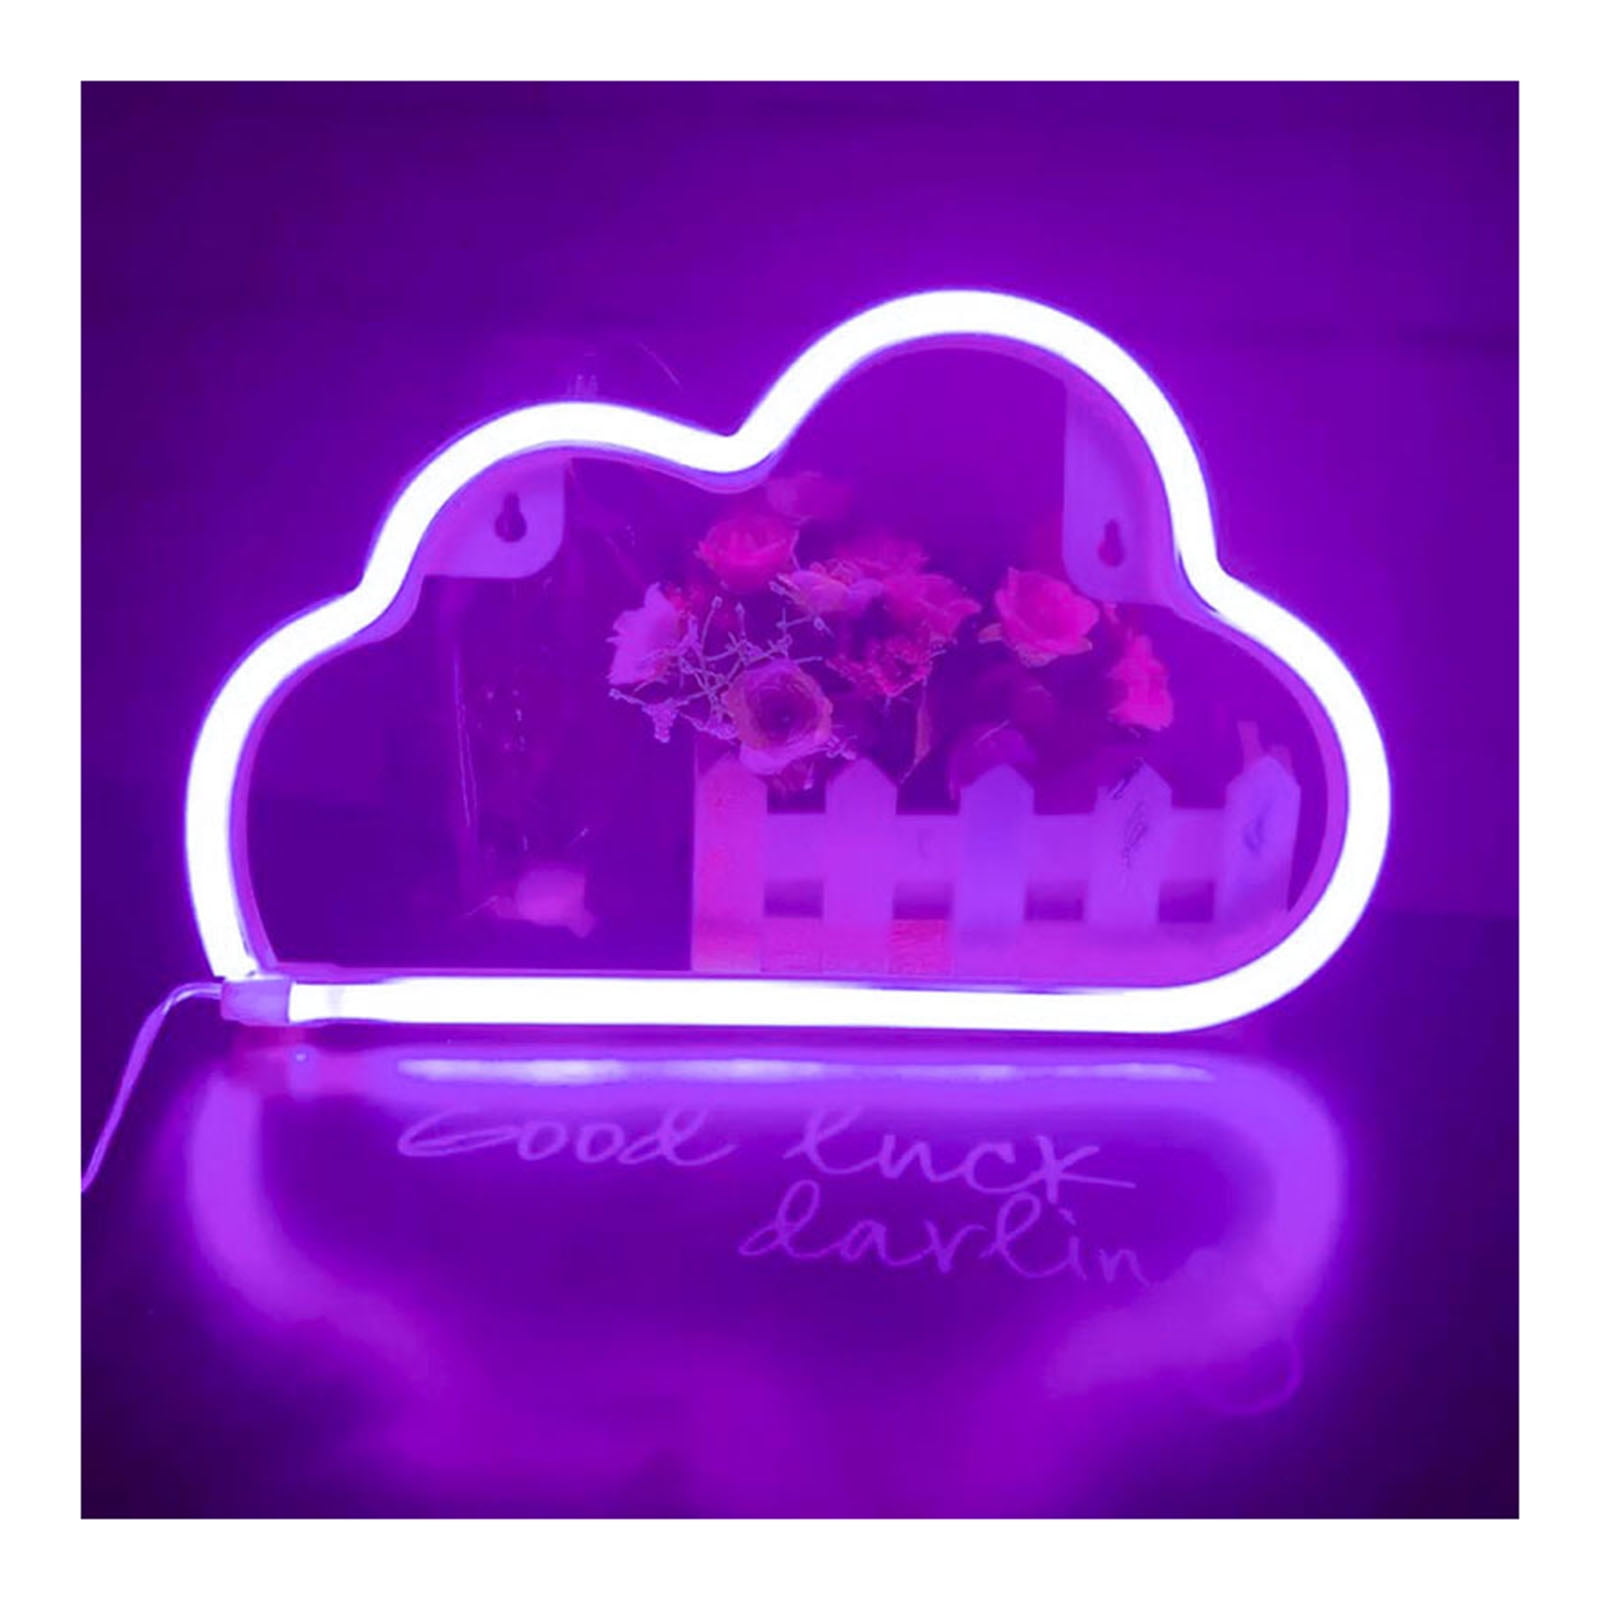 Stamens Led Cloud Neon Light,Cute Cartoon Cloud Led Neon Decorative Lamp Creative Home Decor Small Night Light For Bedroom(Purple） - Walmart.com